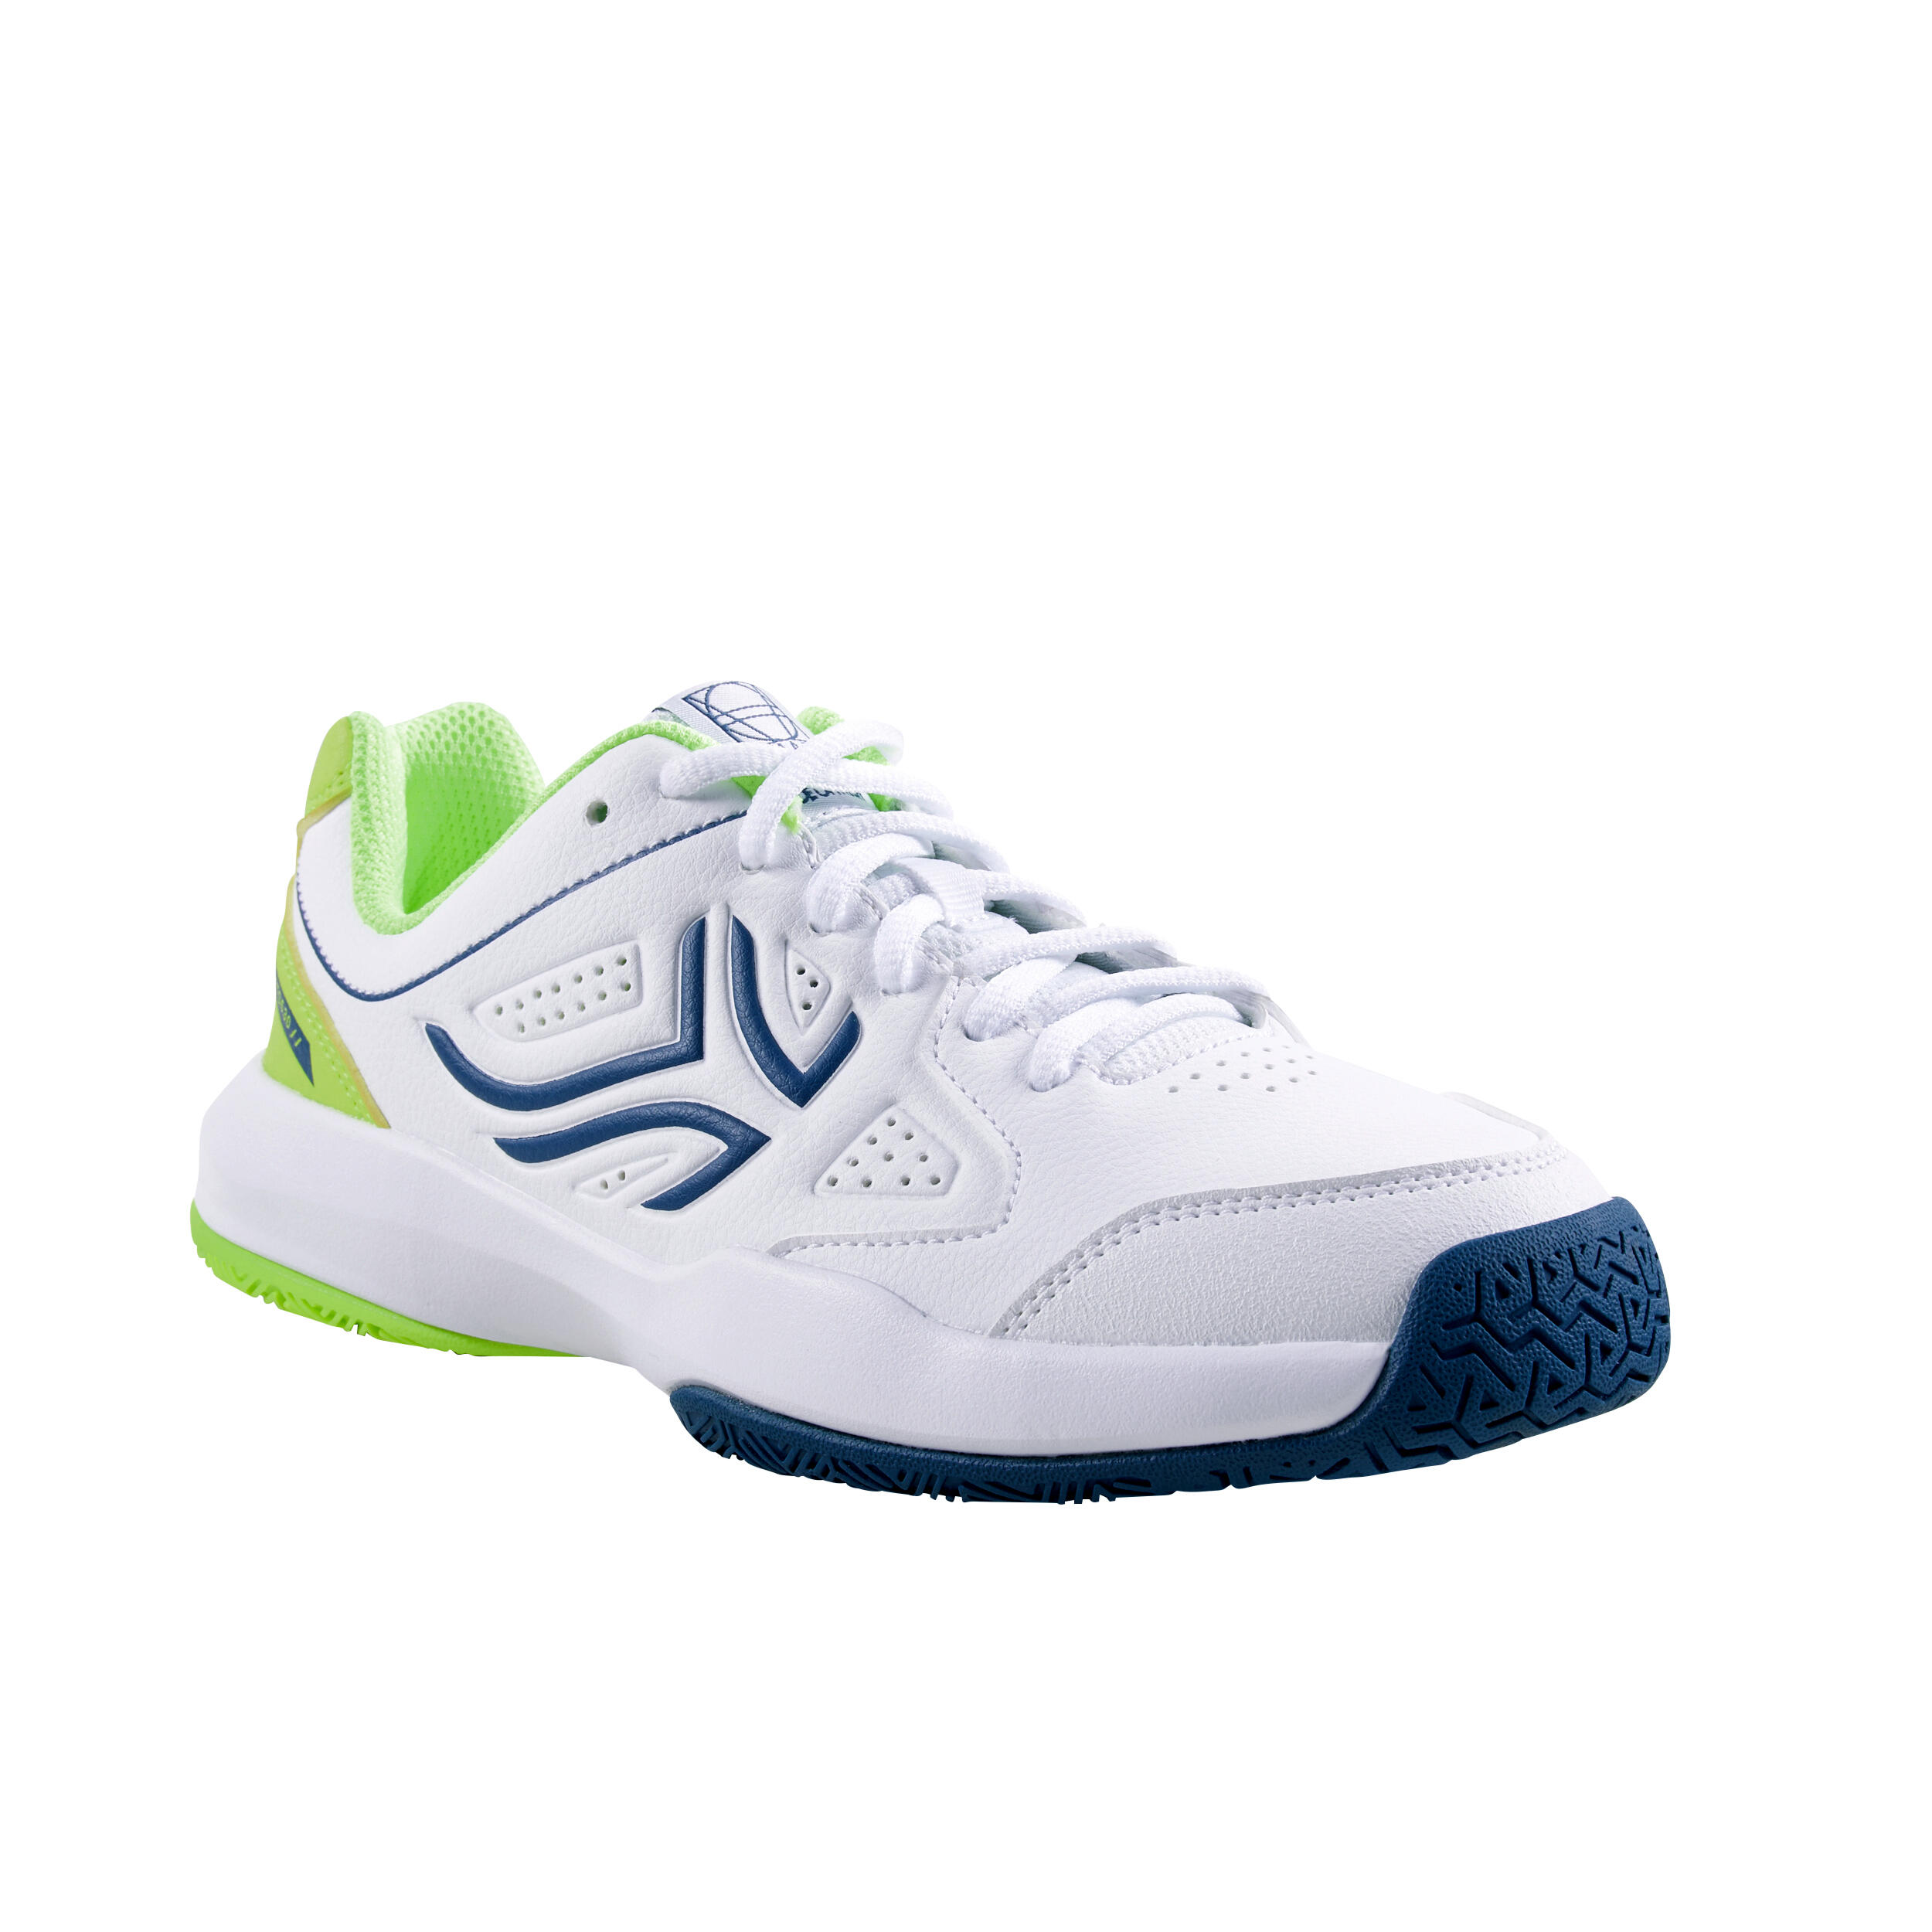 white lace tennis shoes